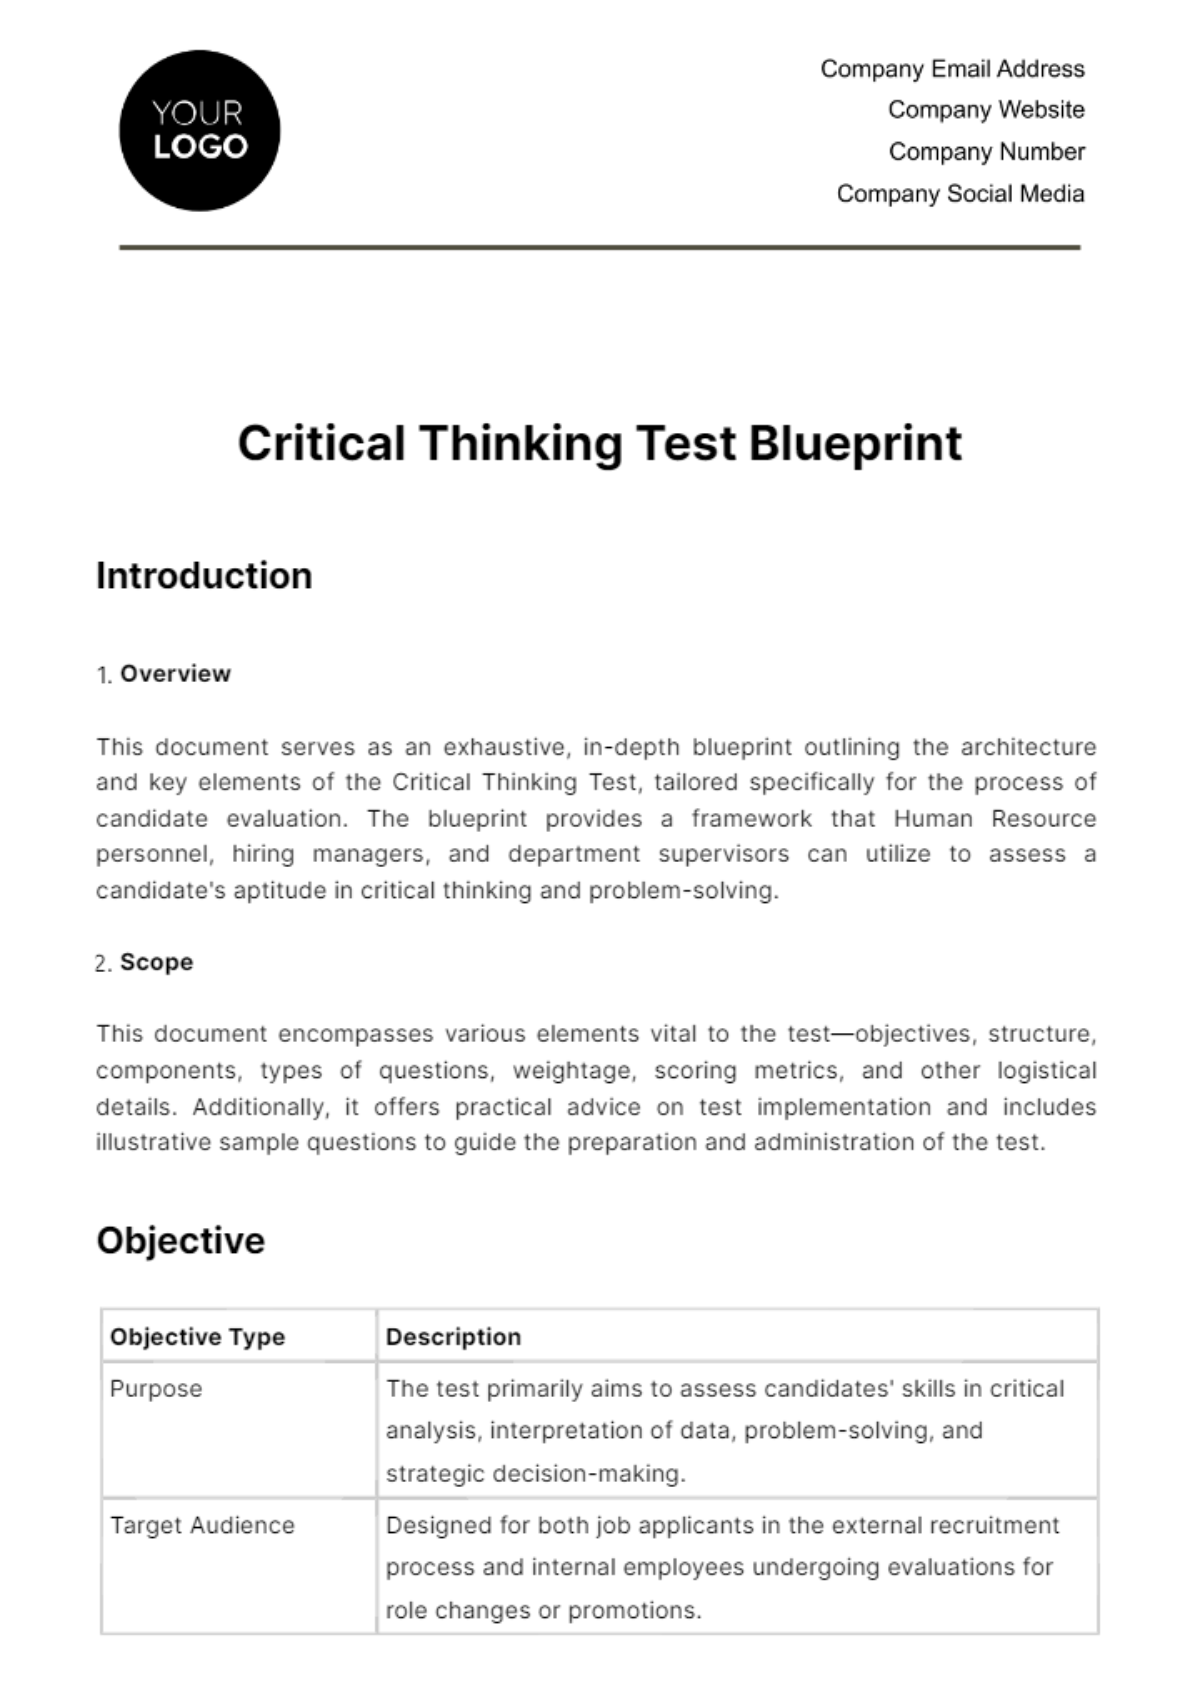 Free Critical Thinking Test Blueprint HR Template